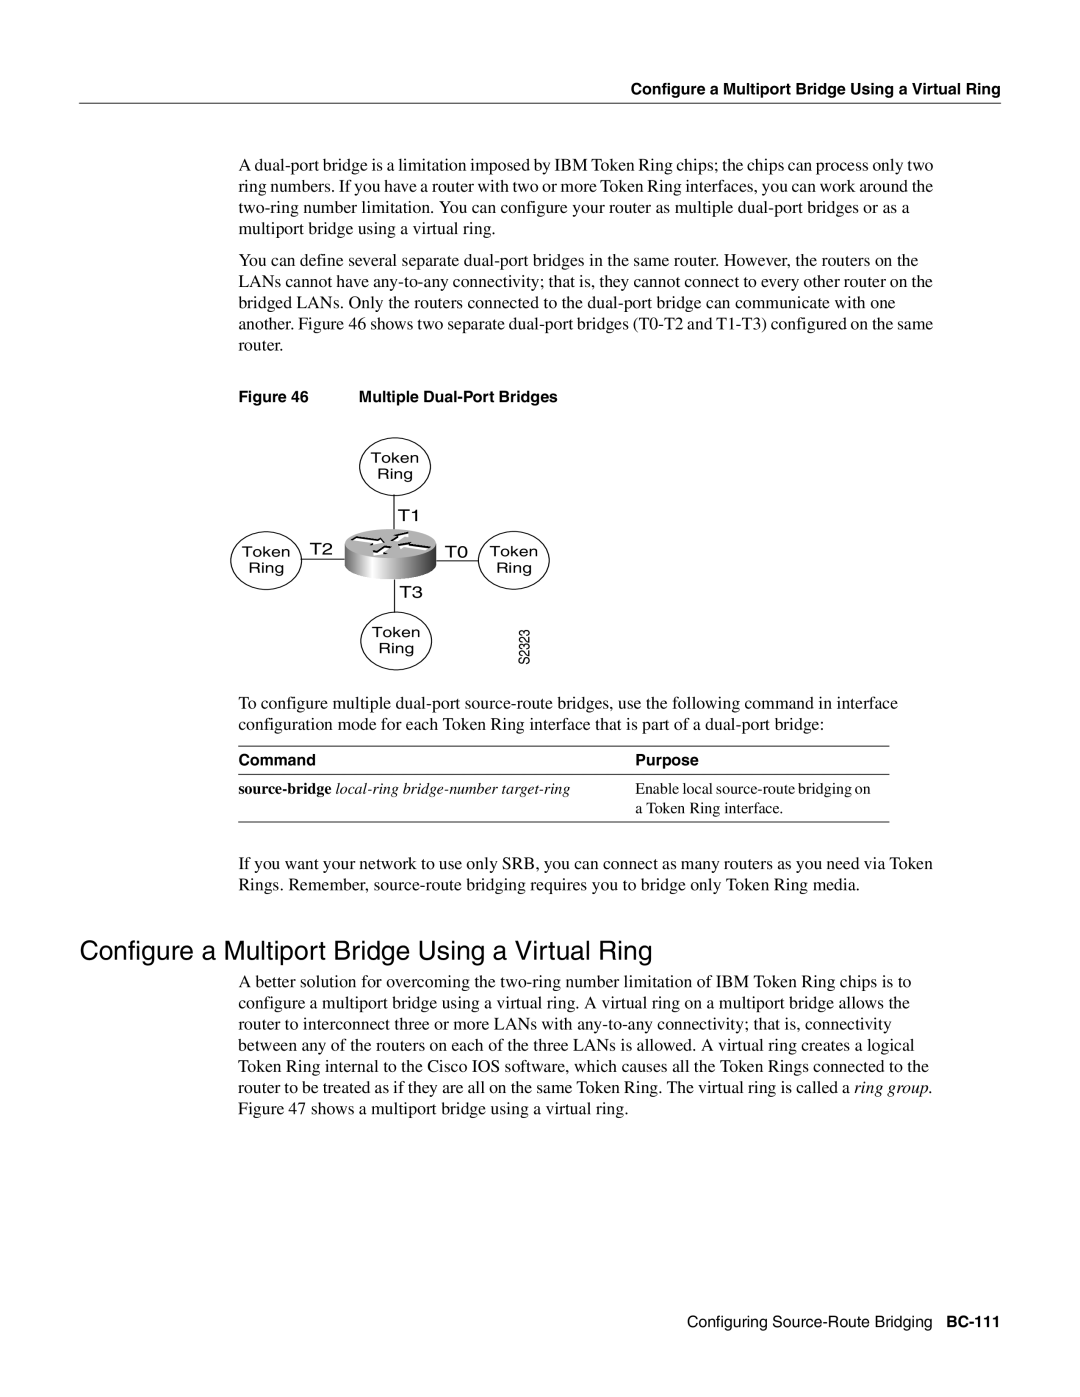 Cisco Systems BC-109 manual Configure a Multiport Bridge Using a Virtual Ring, Multiple Dual-Port Bridges 